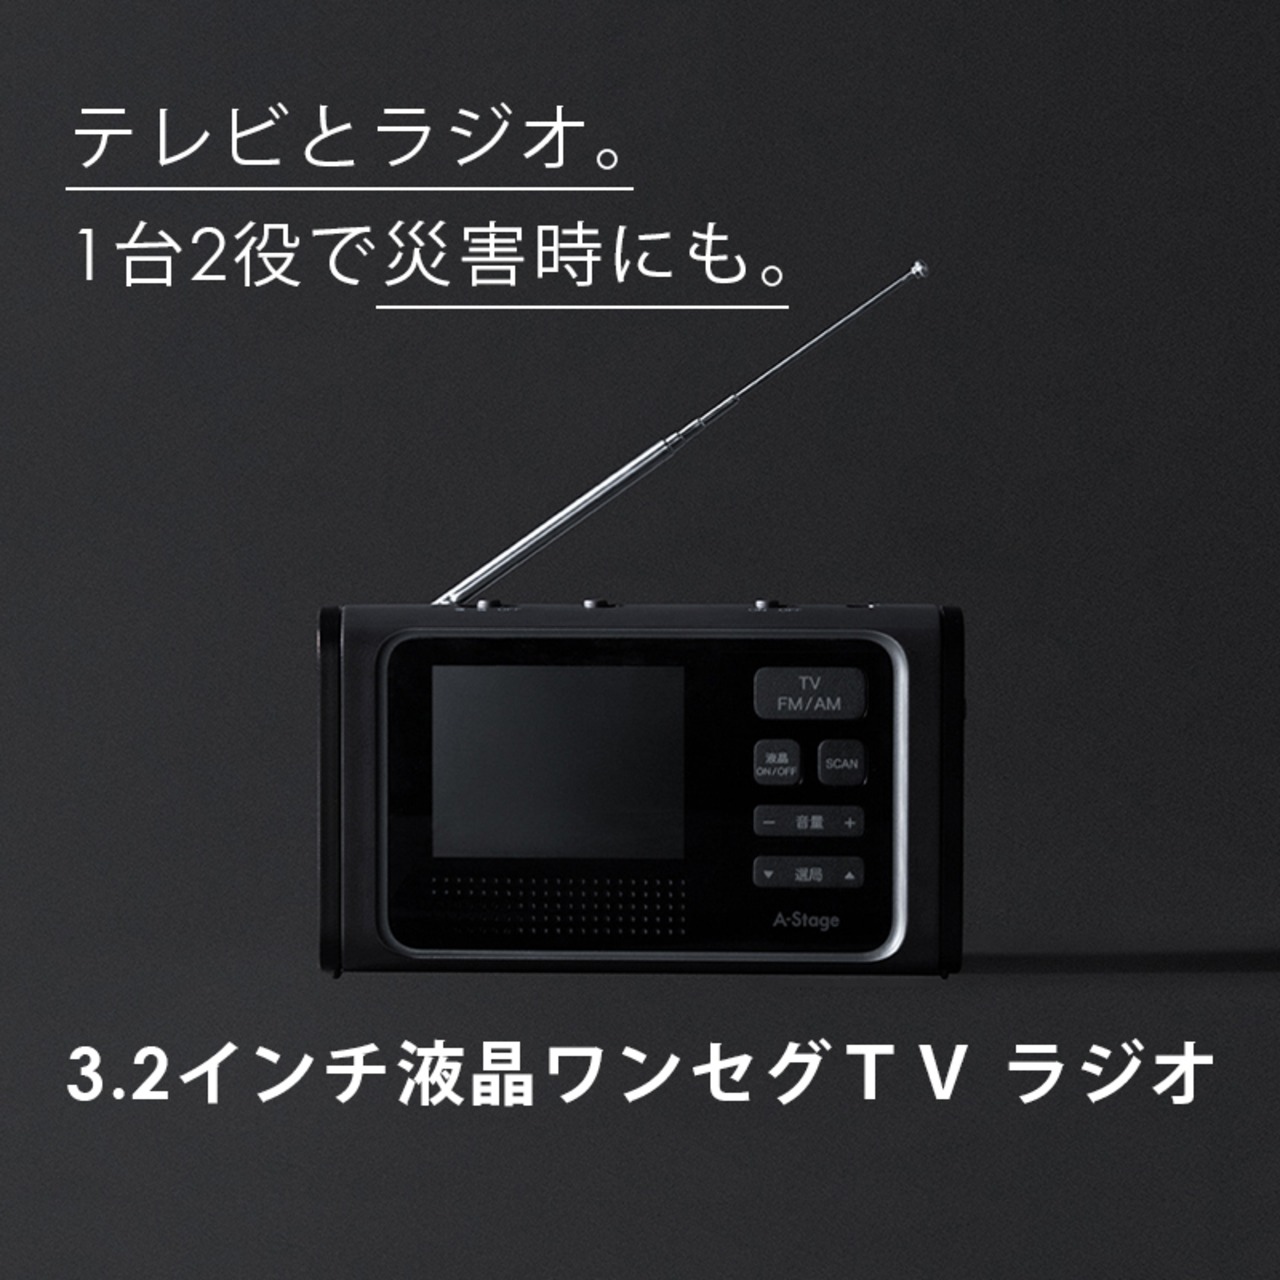 A-Stage 3.2インチ液晶ワンセグTV ラジオ OR01A-03BK